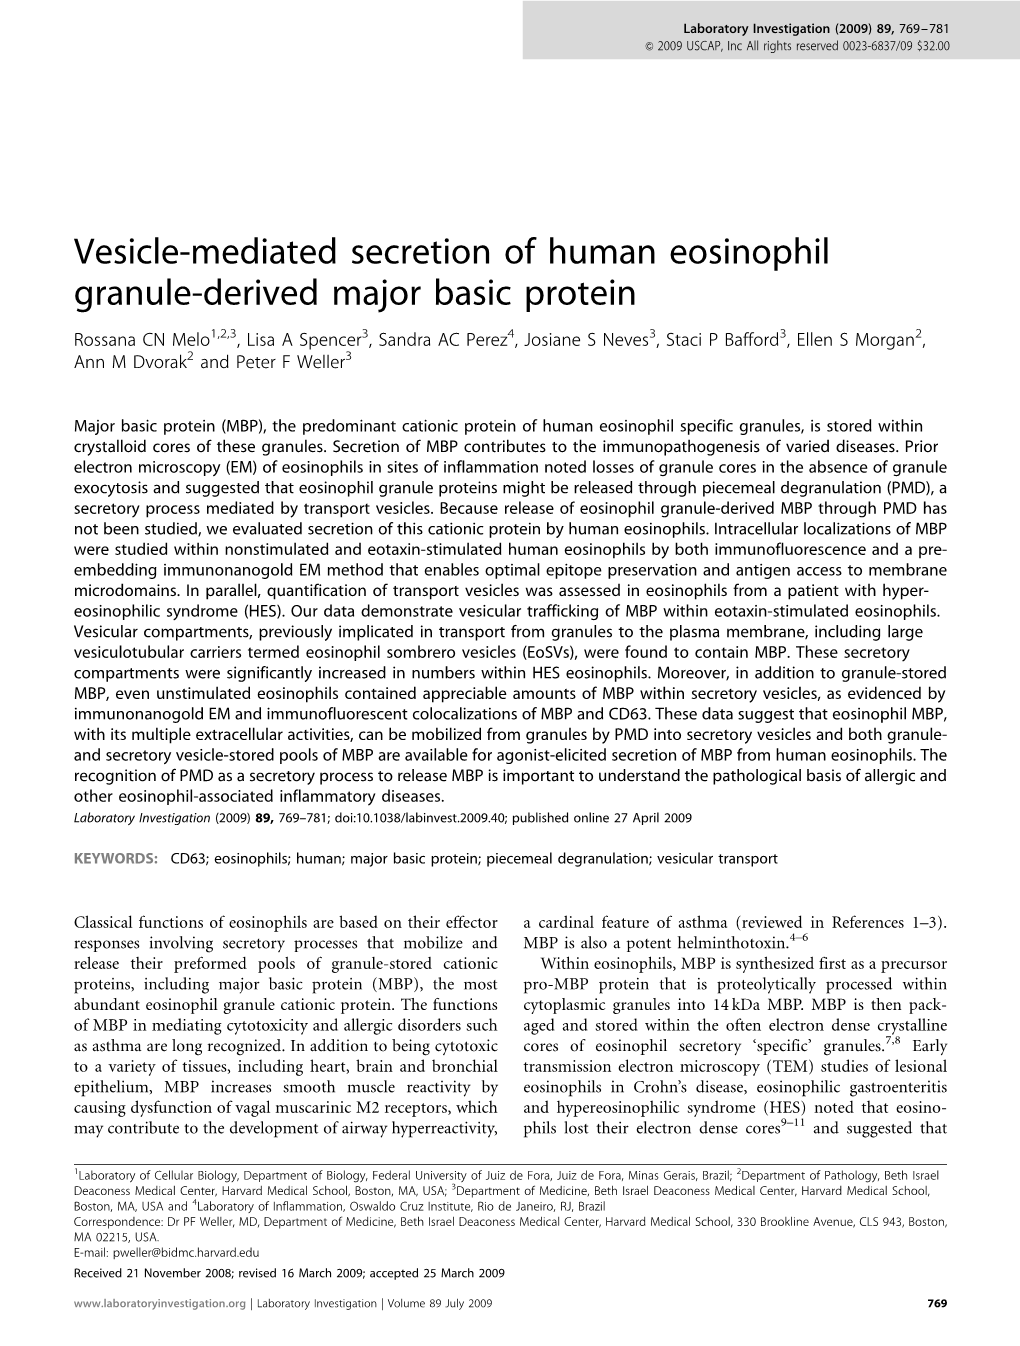 Vesicle-Mediated Secretion of Human Eosinophil Granule-Derived Major